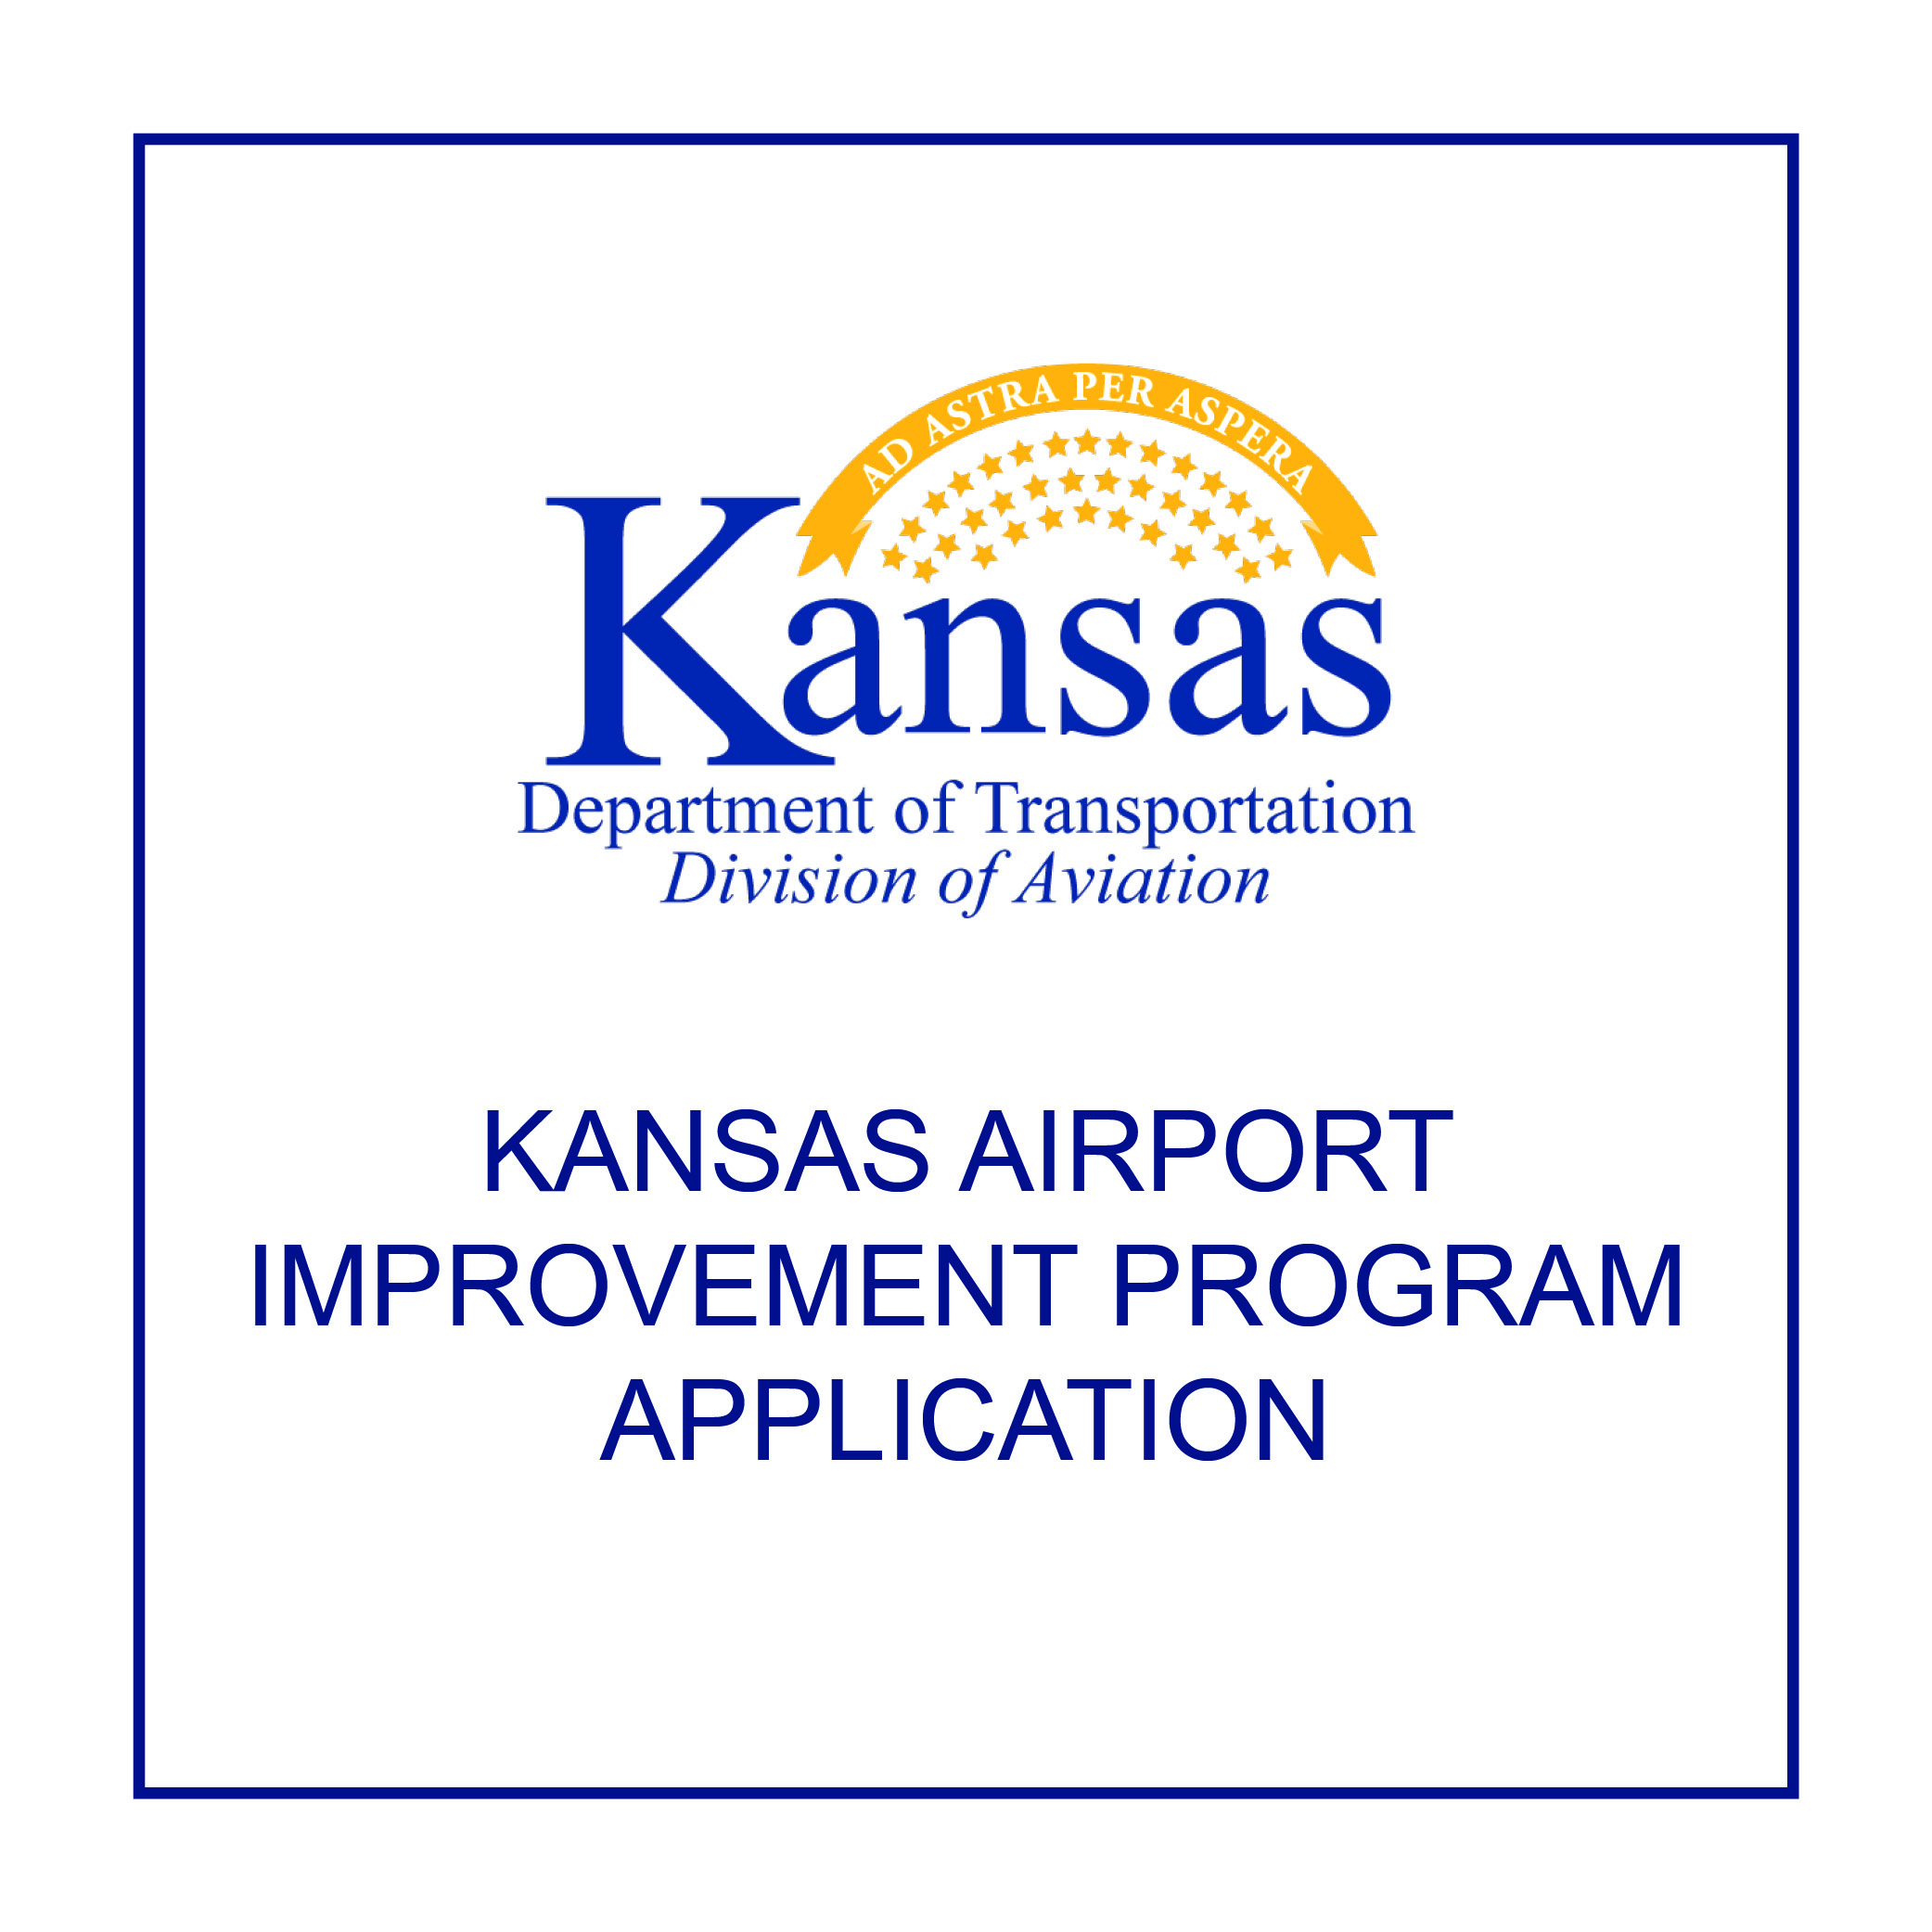 Kansas Airport Improvment Program